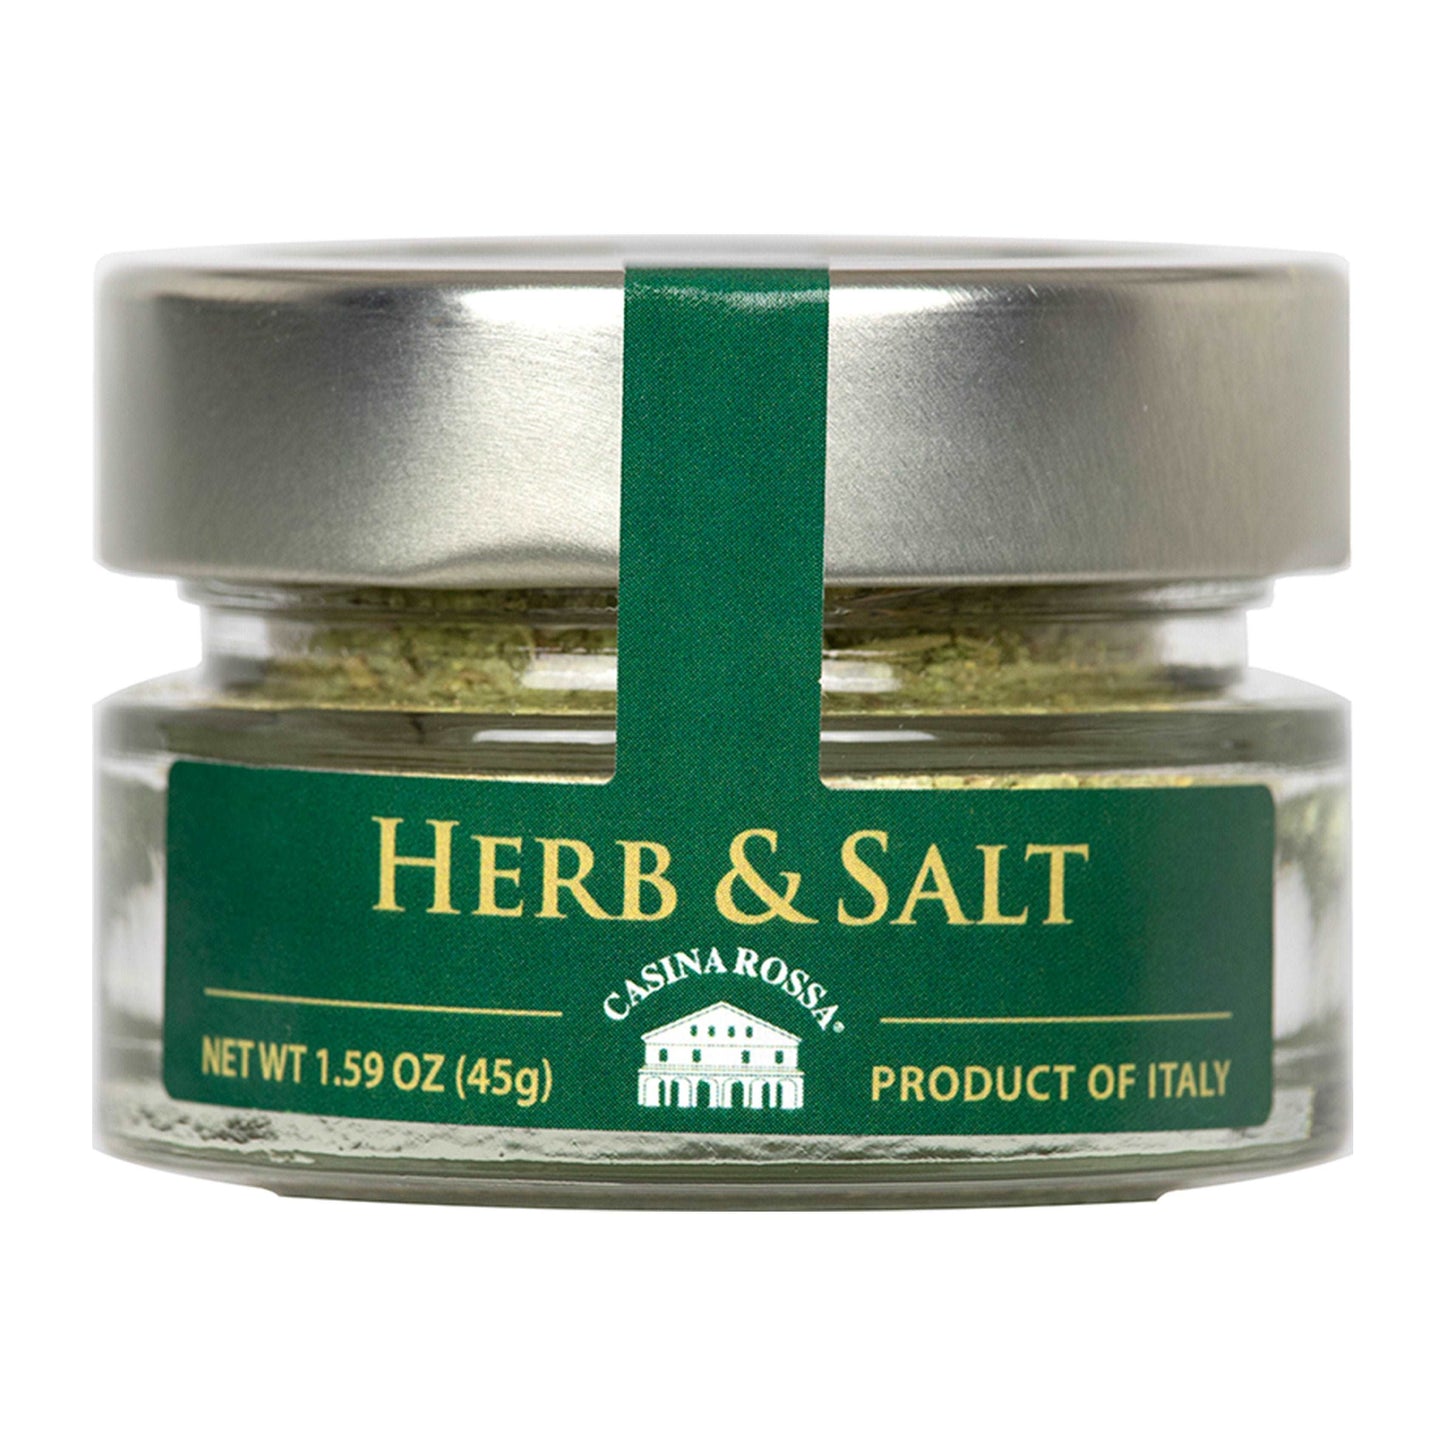 Casina Rossa Small Herb & Salt